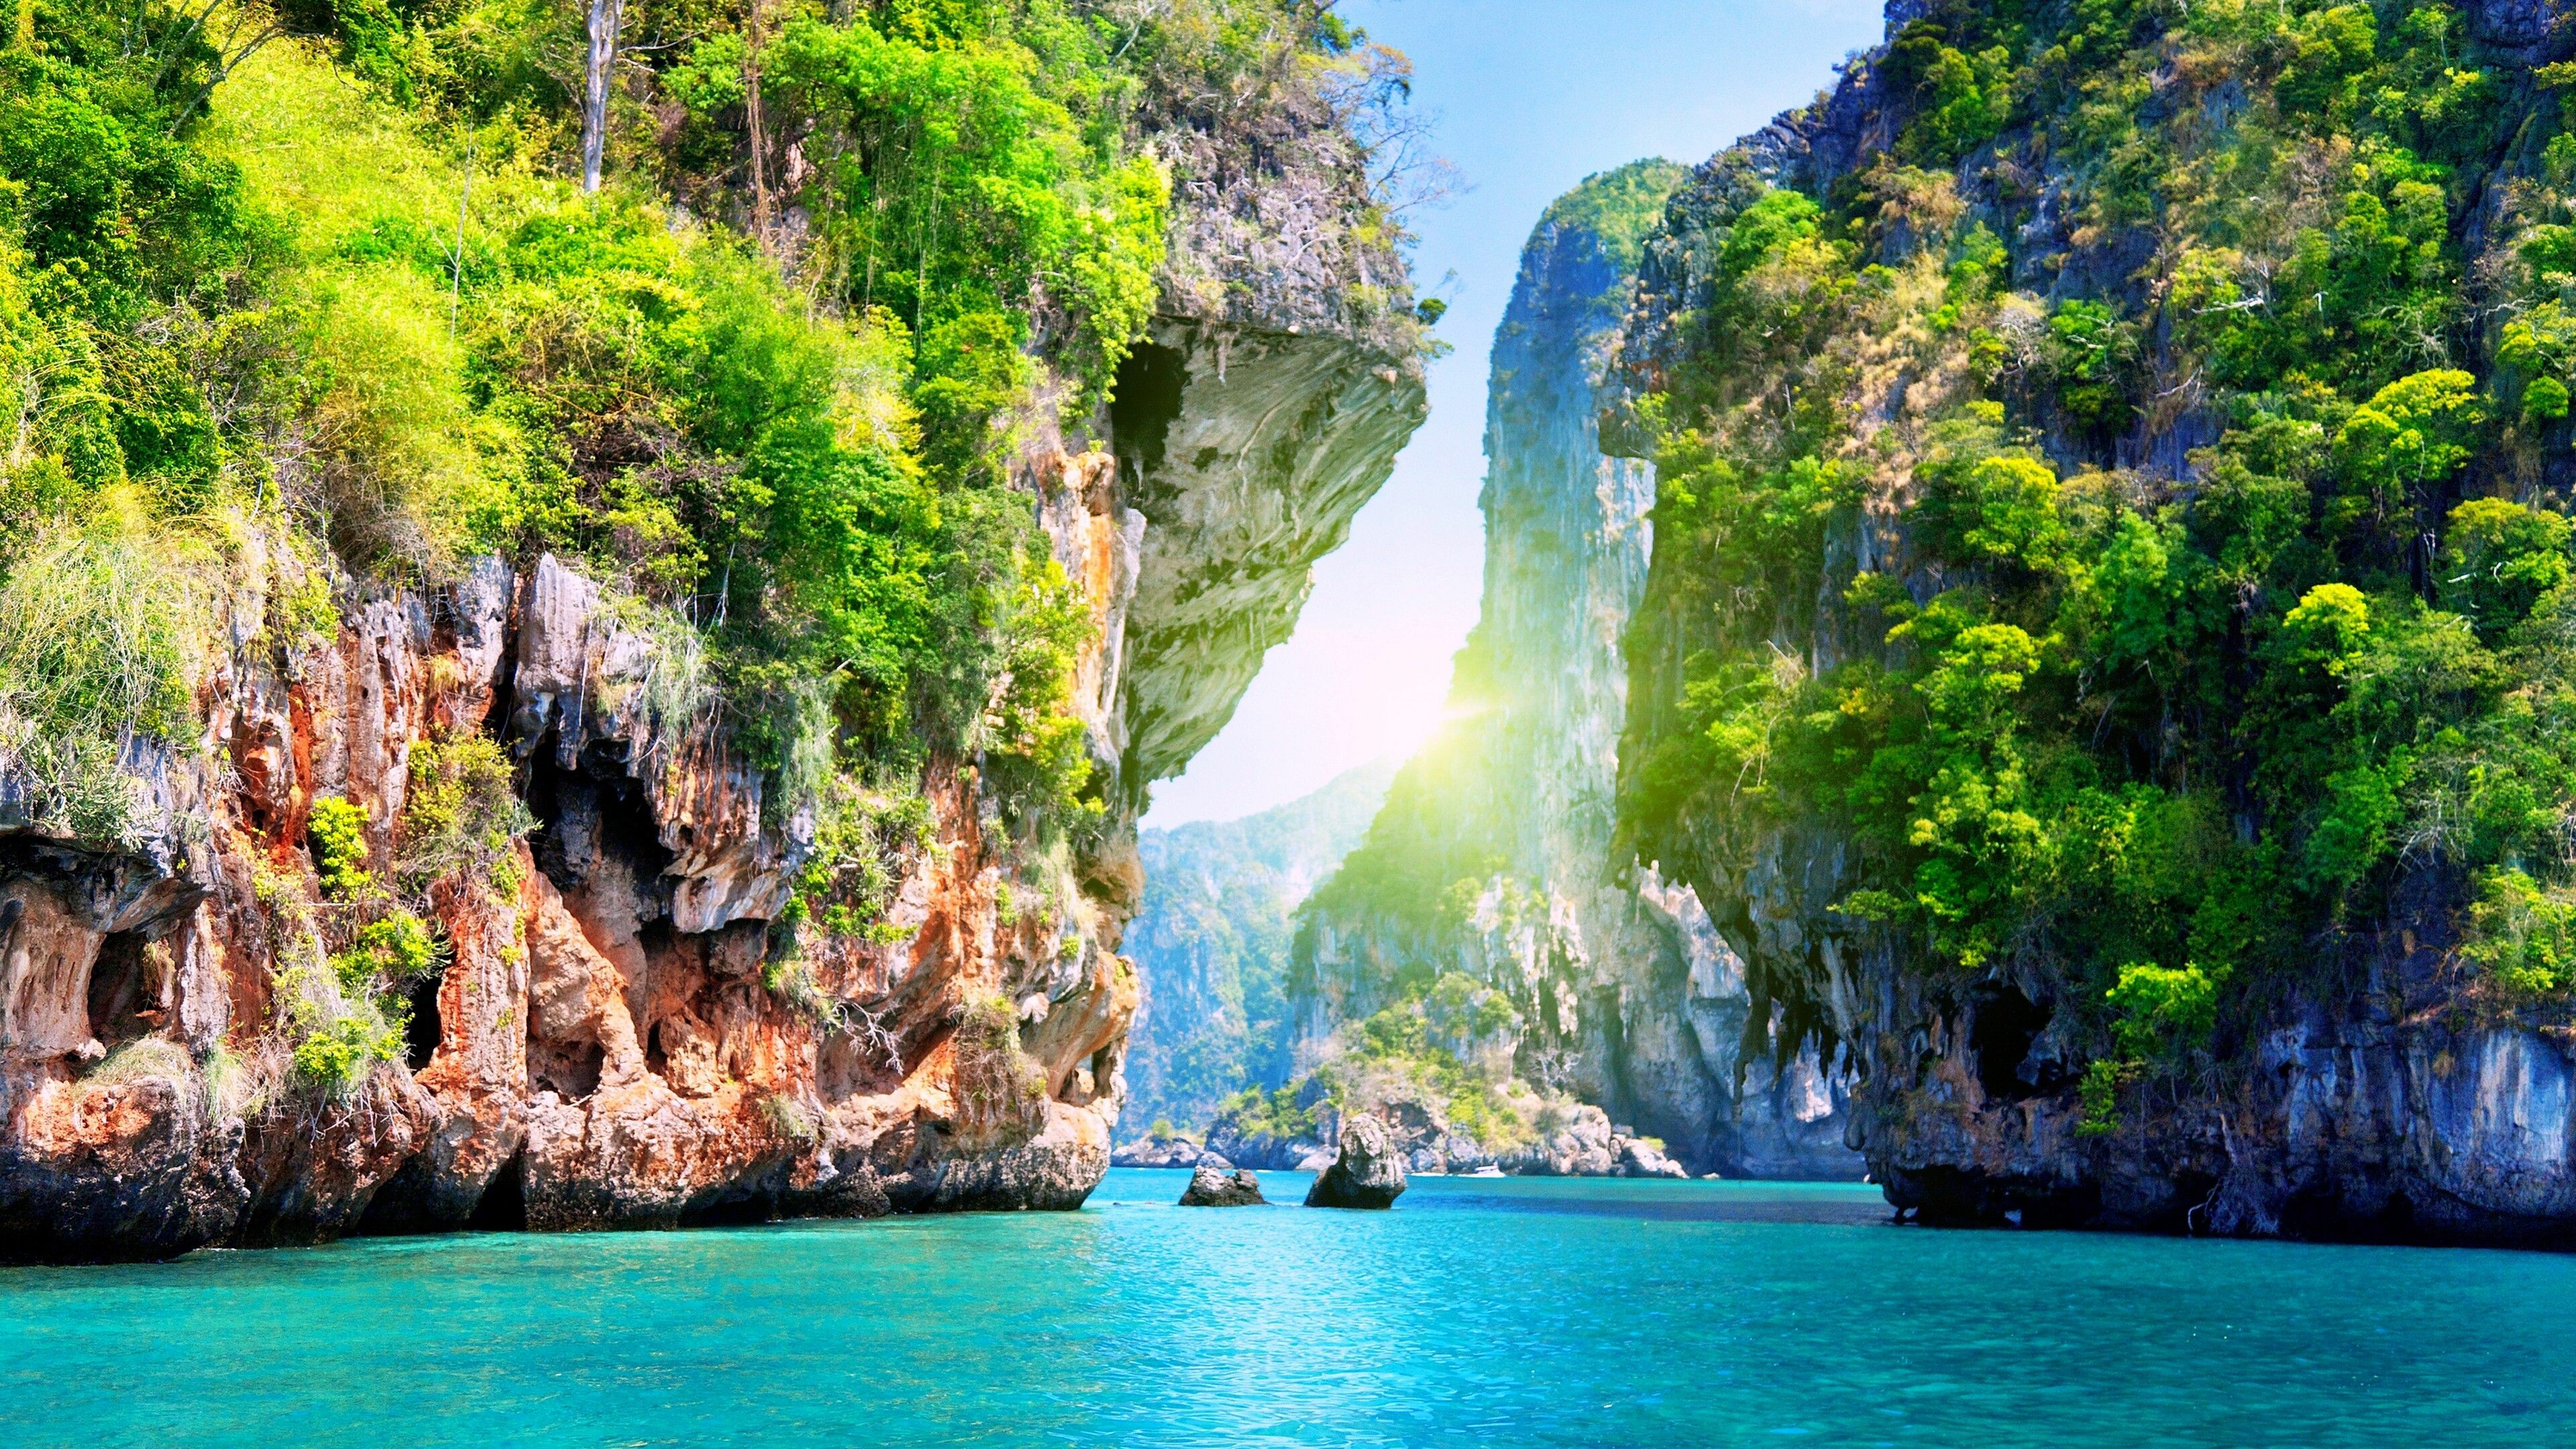 Phi Phi: A popular archipelago 40 km south of Phuket, Thailand. 3840x2160 4K Background.